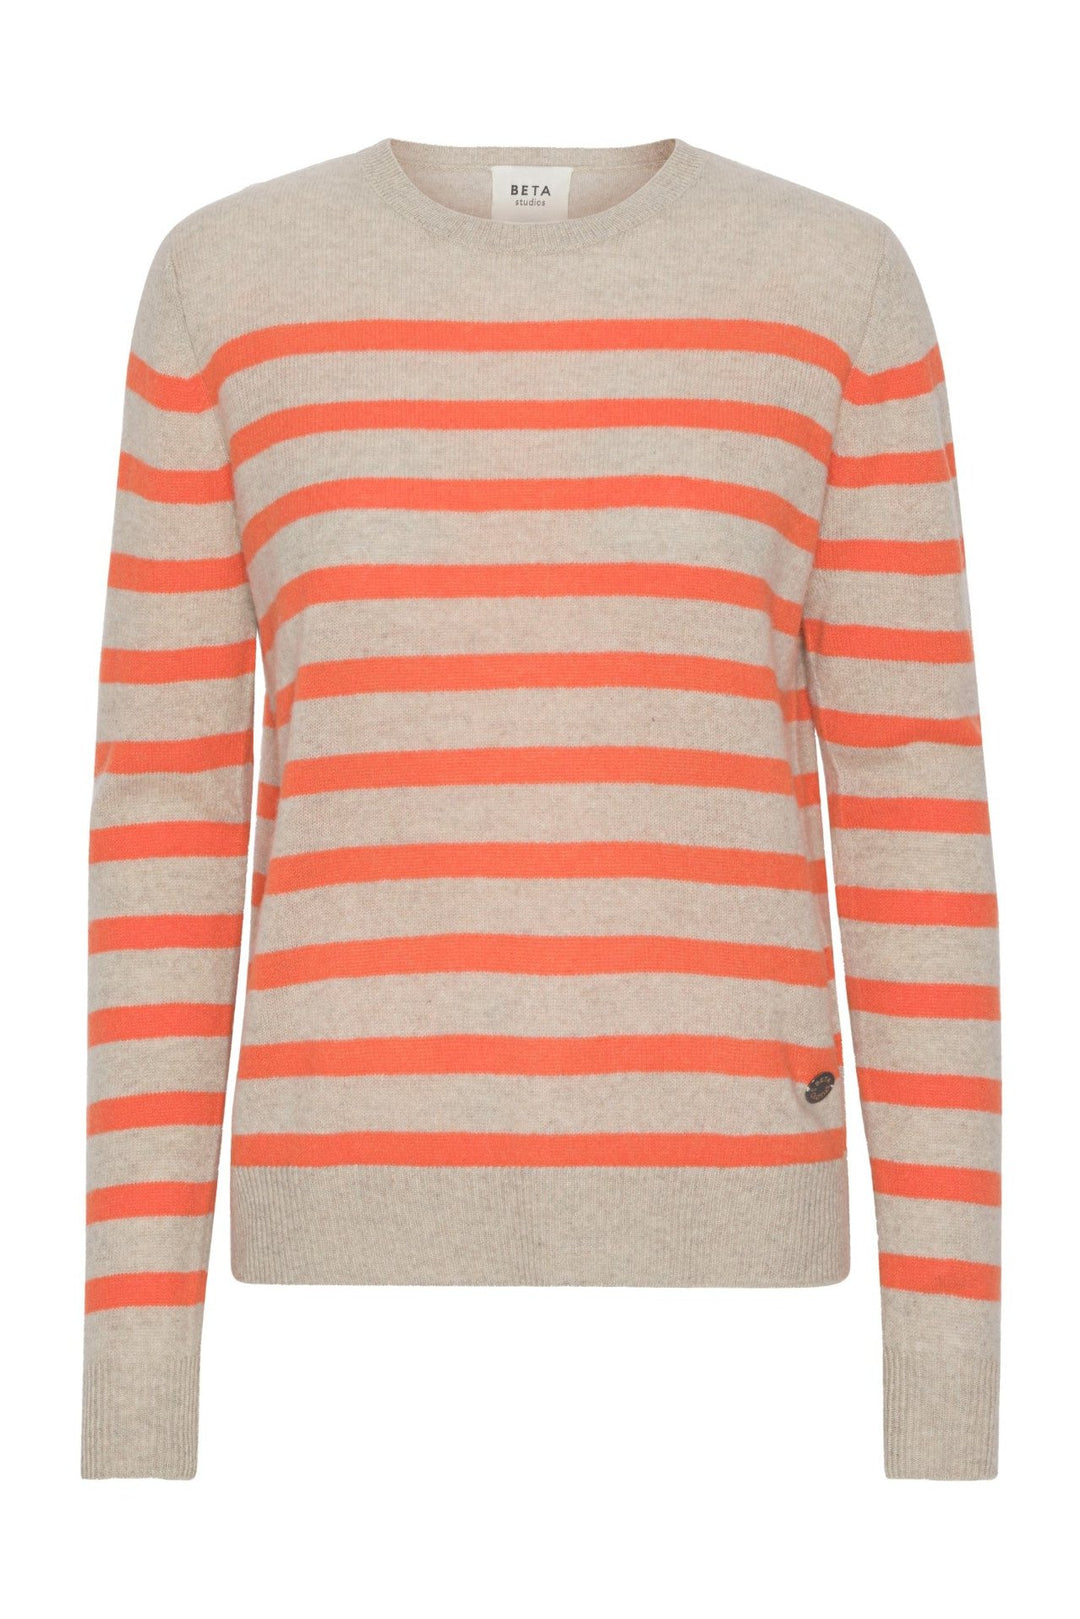 Sweater | BETA STUDIOS Bibi Striped, sand melange/poppy orange